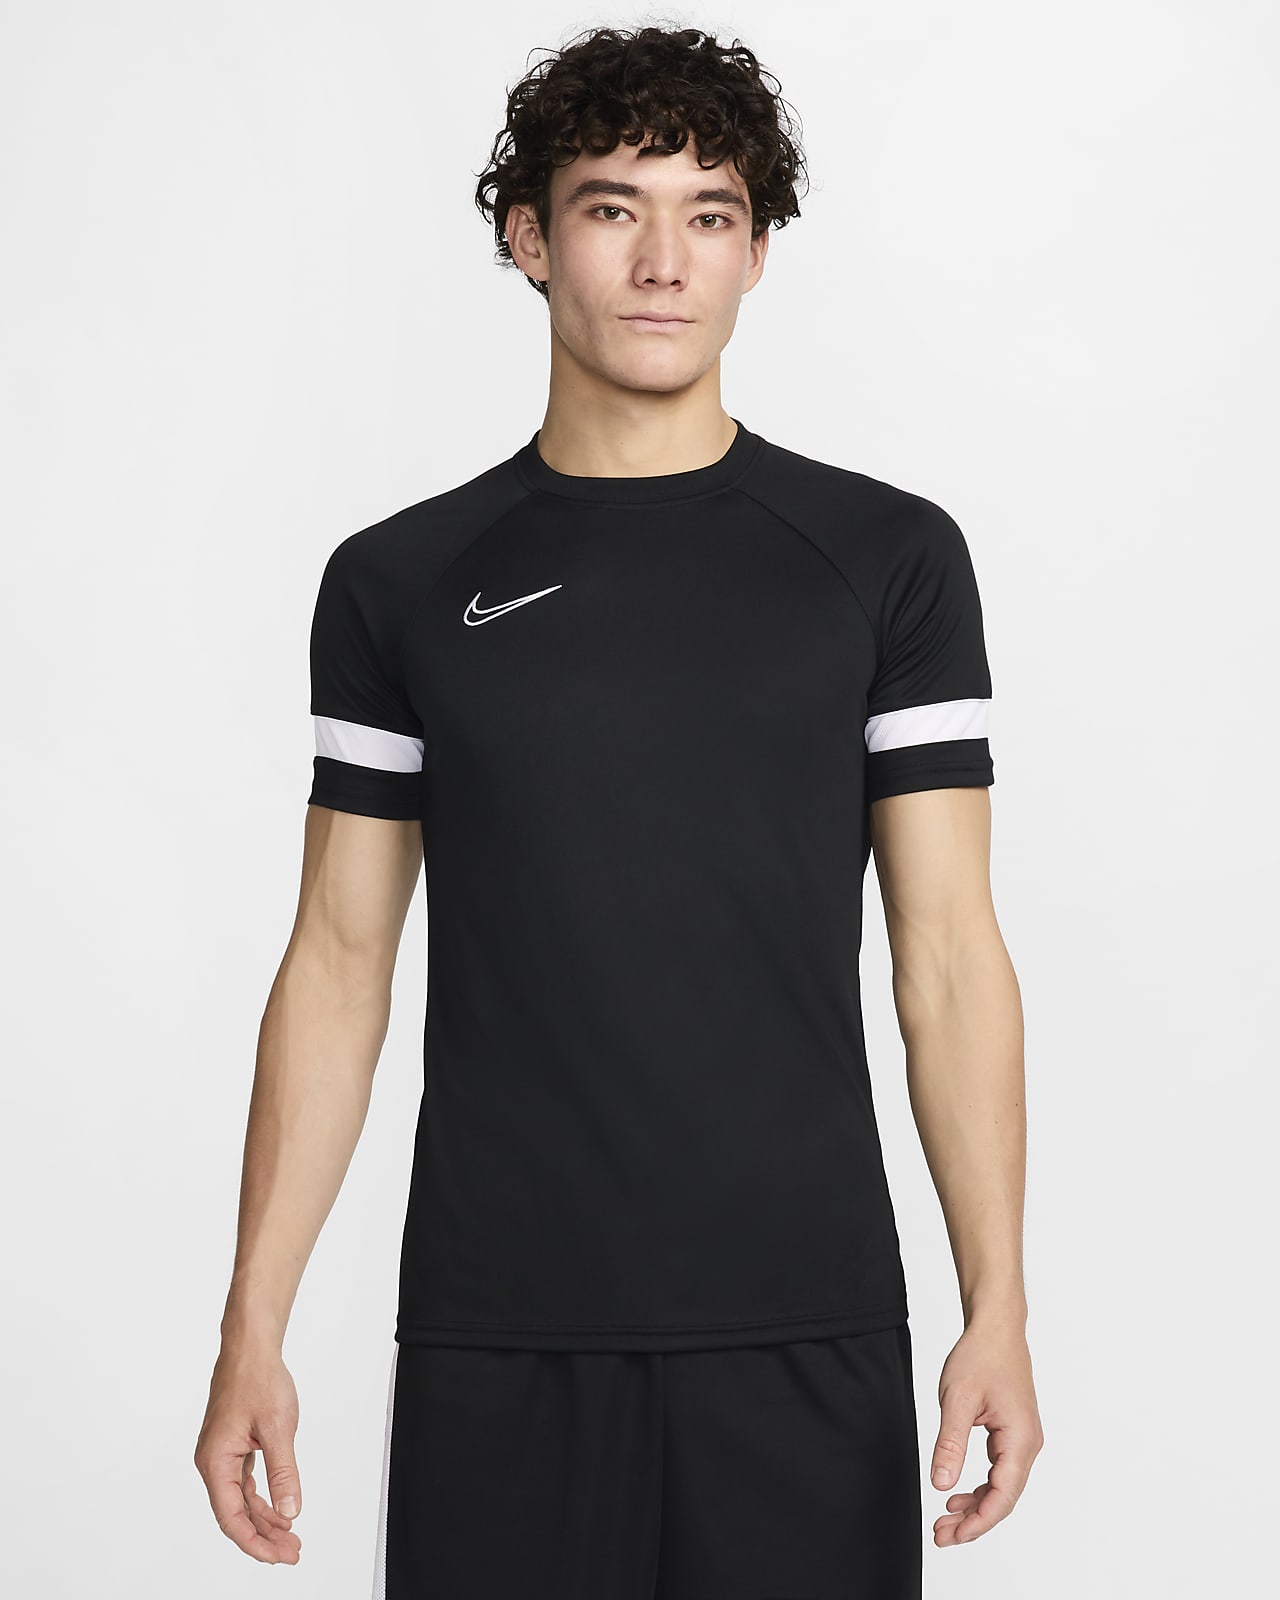 Men\'s Academy Top. Football Nike Dri-FIT Nike Short-Sleeve ID